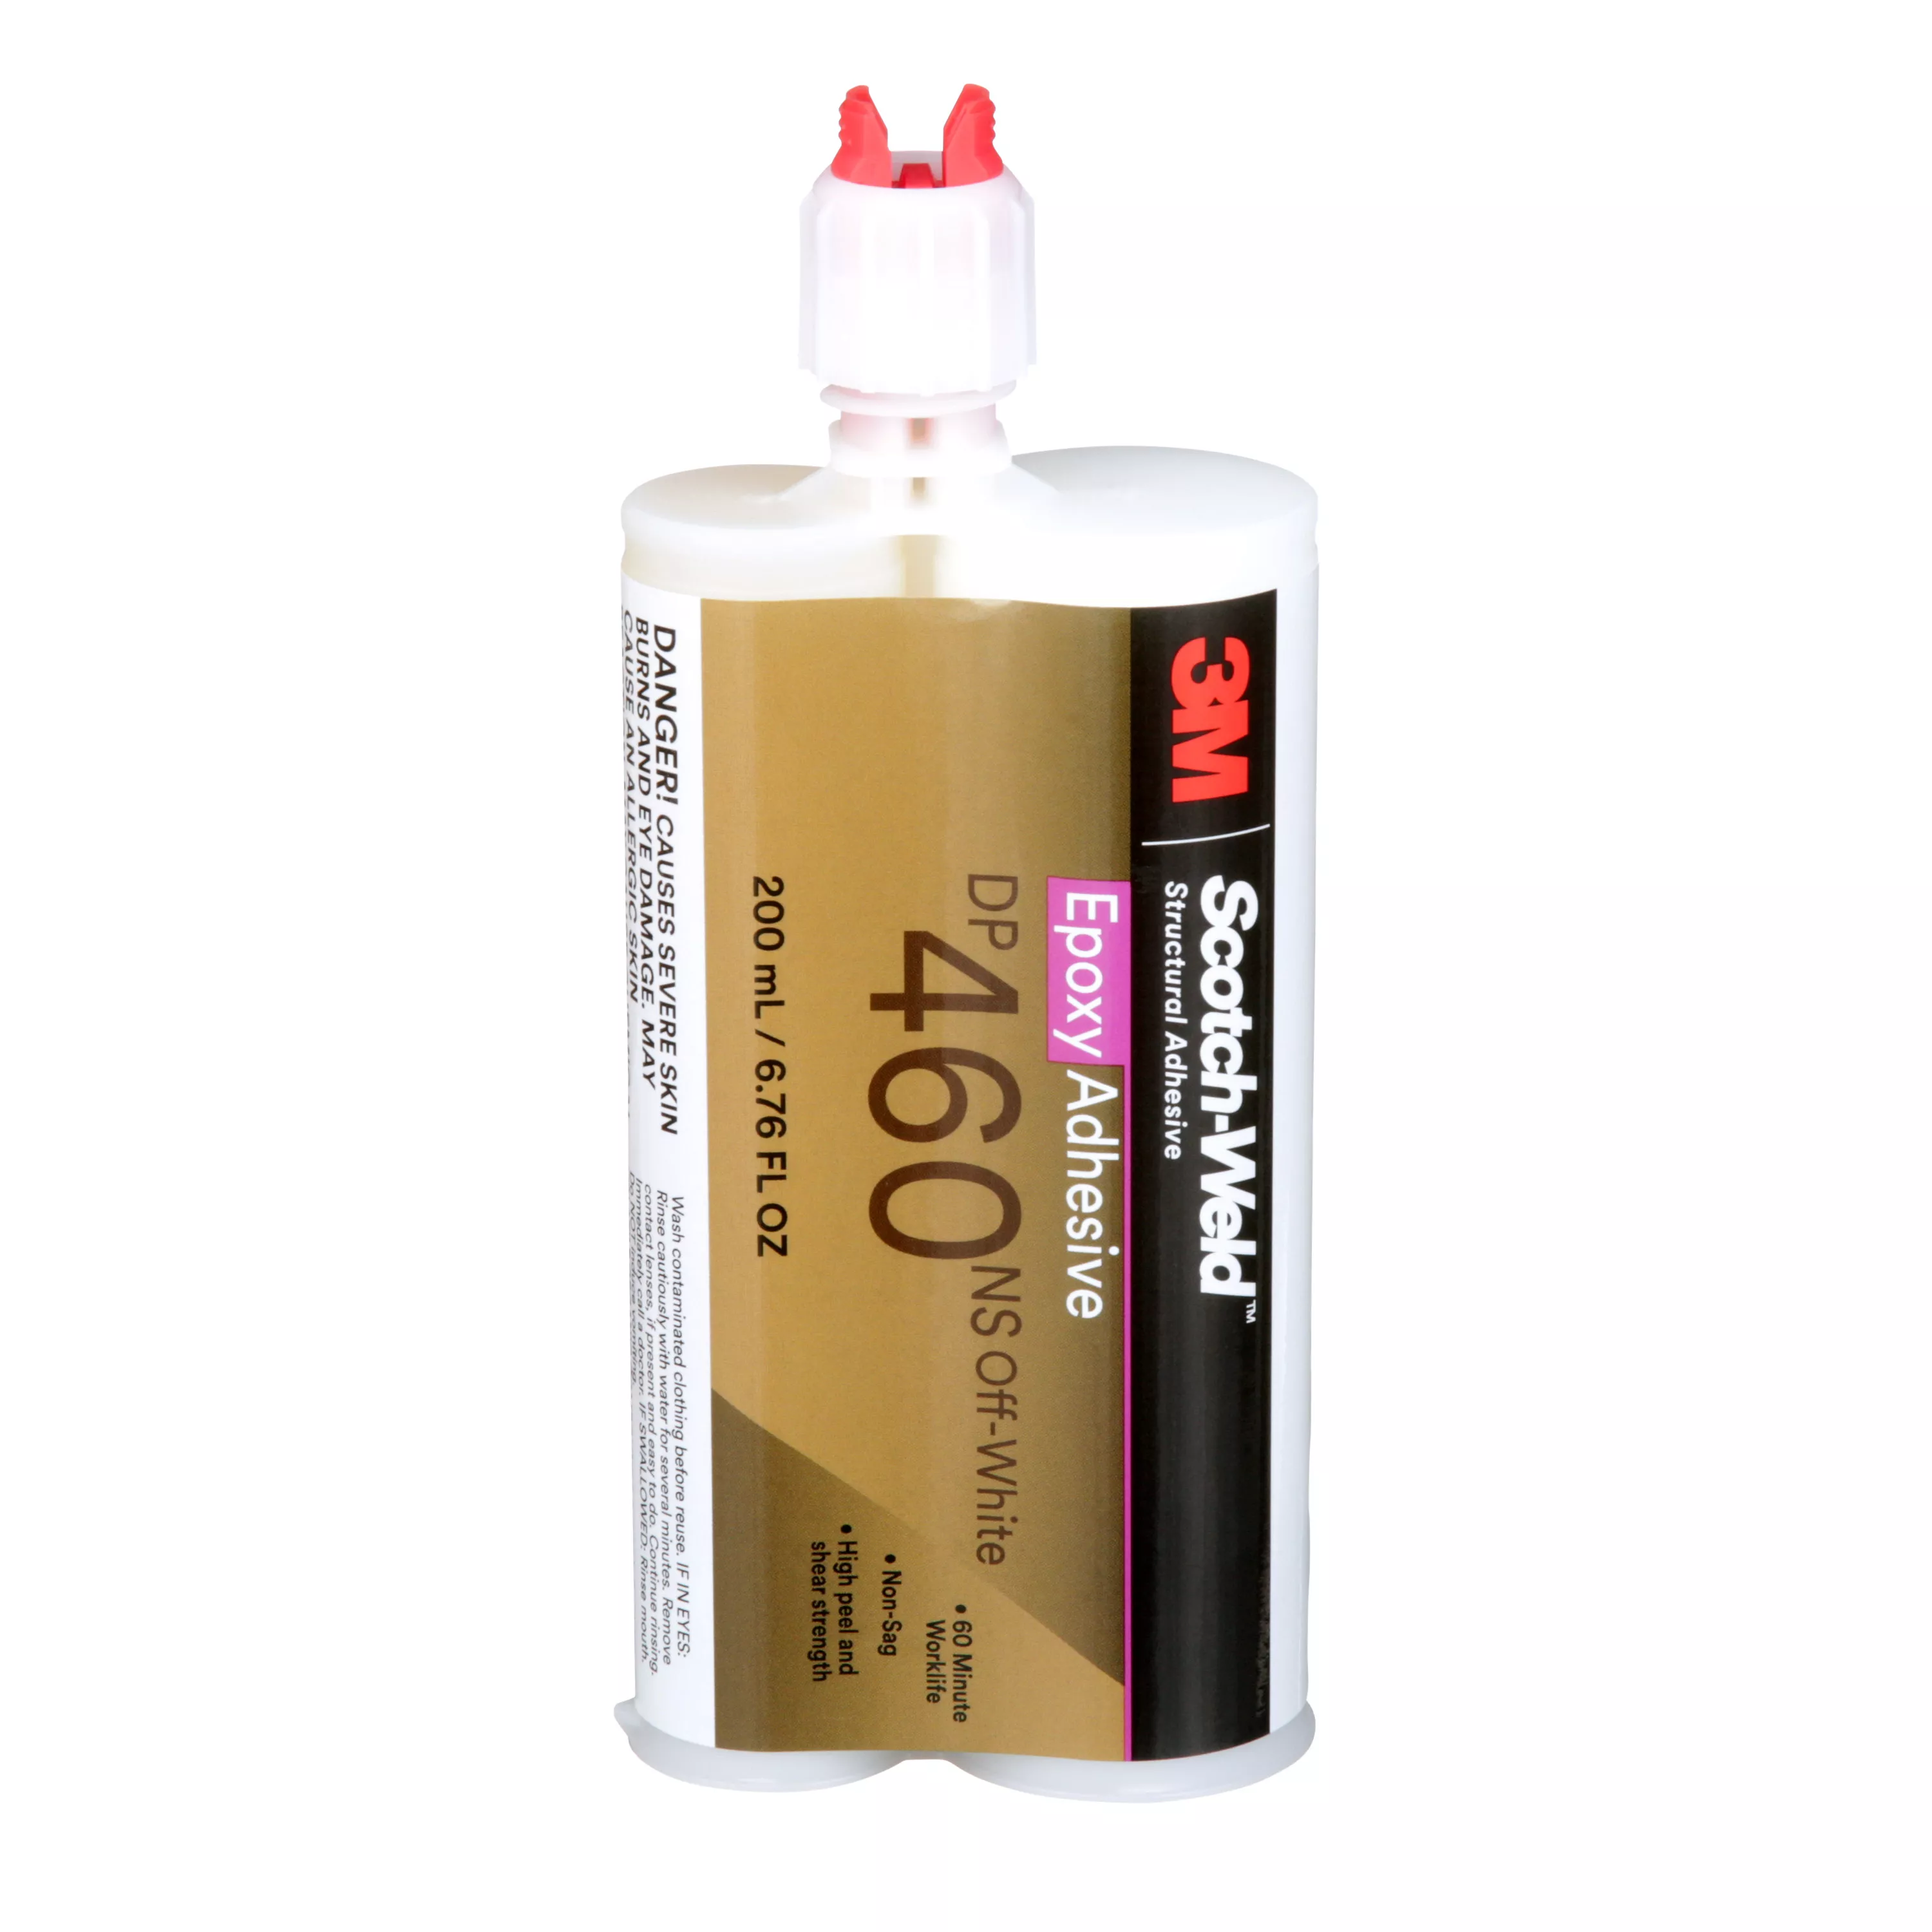 3M™ Scotch-Weld™ Epoxy Adhesive DP460NS, Off-White, 200 mL Duo-Pak,
12/Case